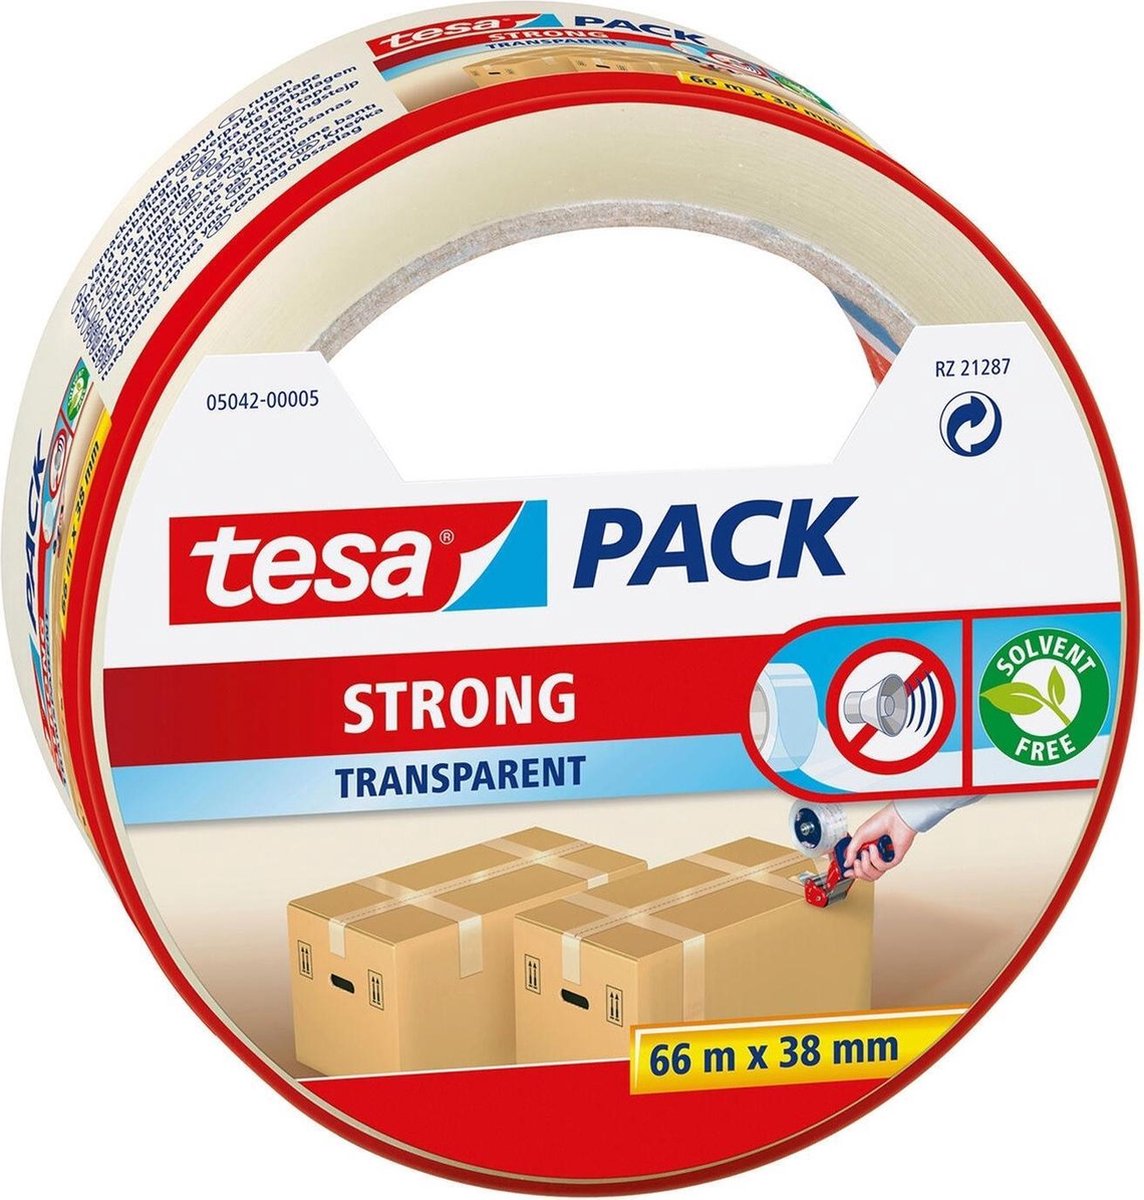 2x Tesa verpakkingstape transparant 66 mtr x 38 mm - Klusmateriaal - Verpakkingsmateriaal - Inpakmateriaal - Verpakkingsbenodigdheden - Verpakkingstape/inpaktape - Dozen afsluittape - Tesa